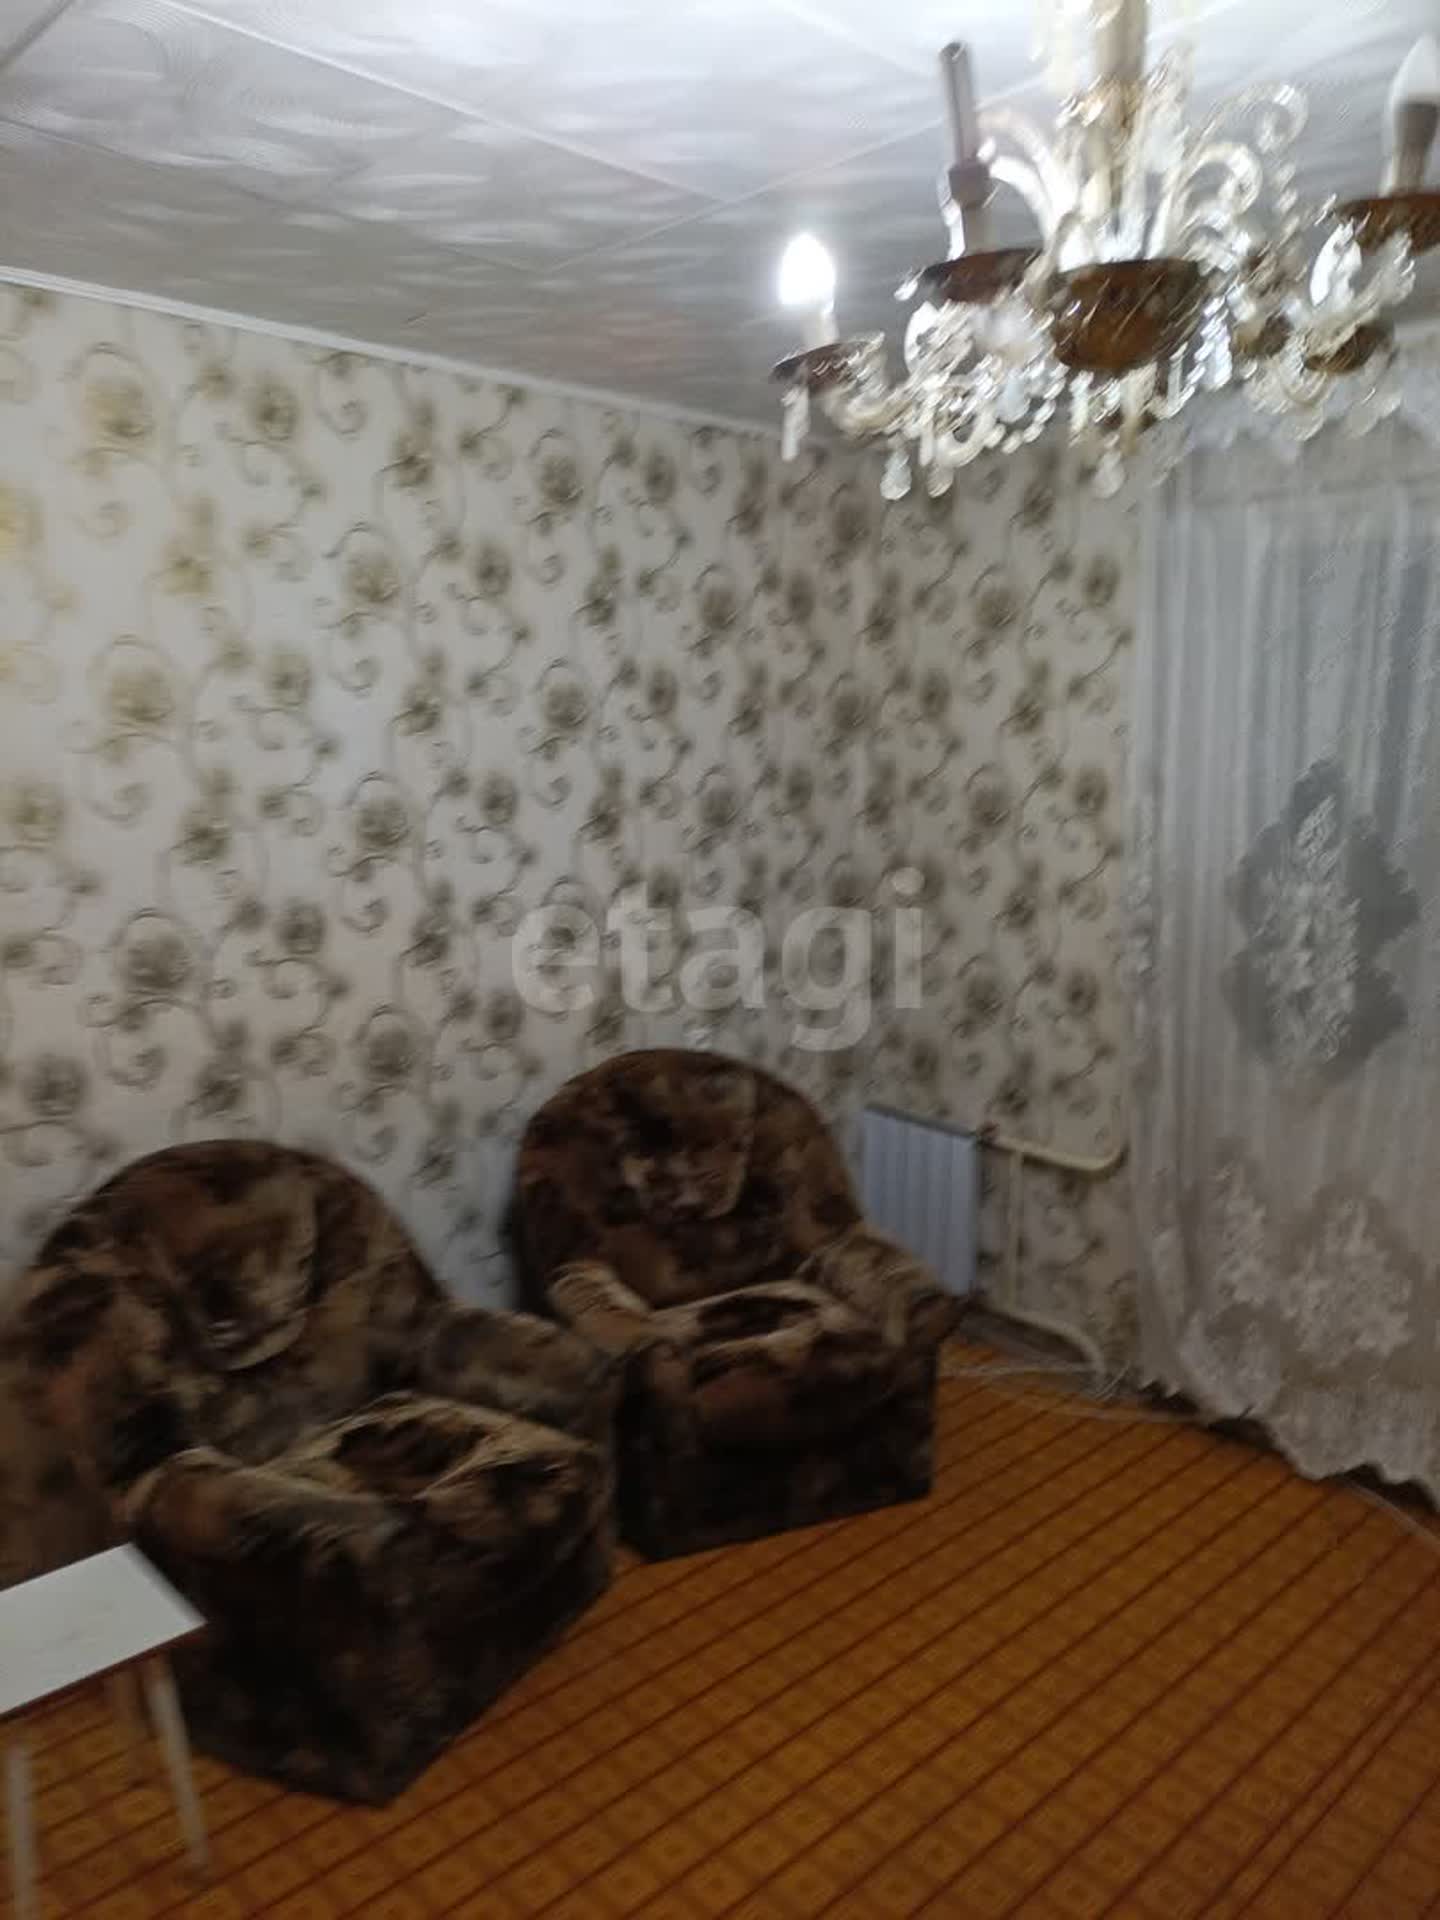 Аренда 2-комнатной квартиры, Челябинск, Челябинская область,  Златоуст